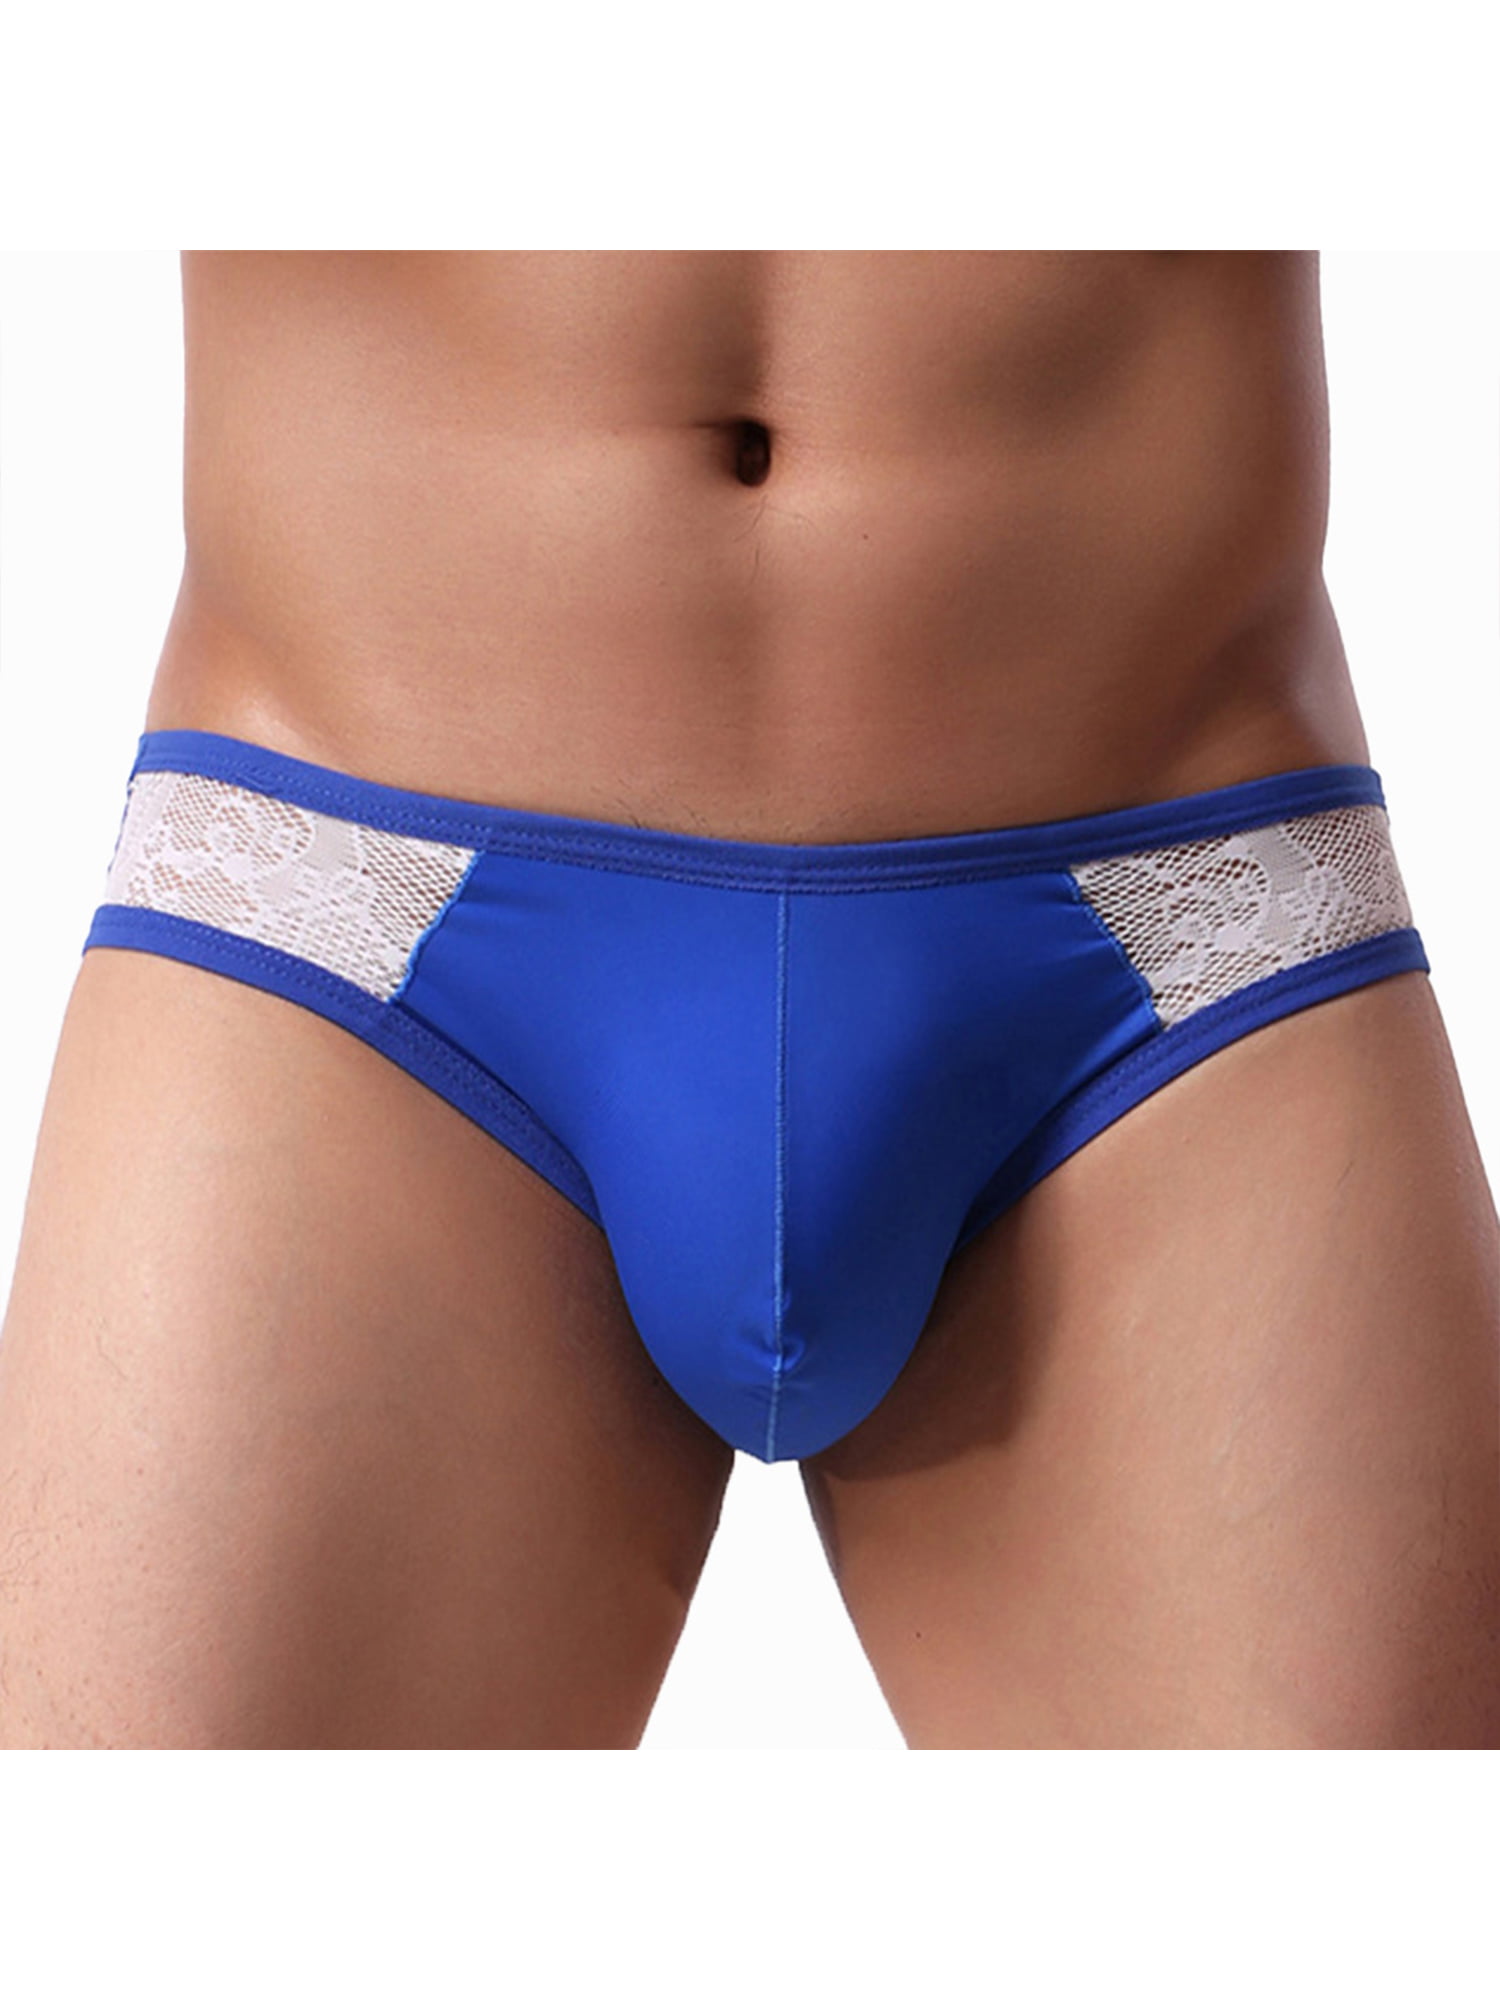 Men's Lace Thong G-String Sissy Pouch Panties Bikini Underwear Briefs Underpants 